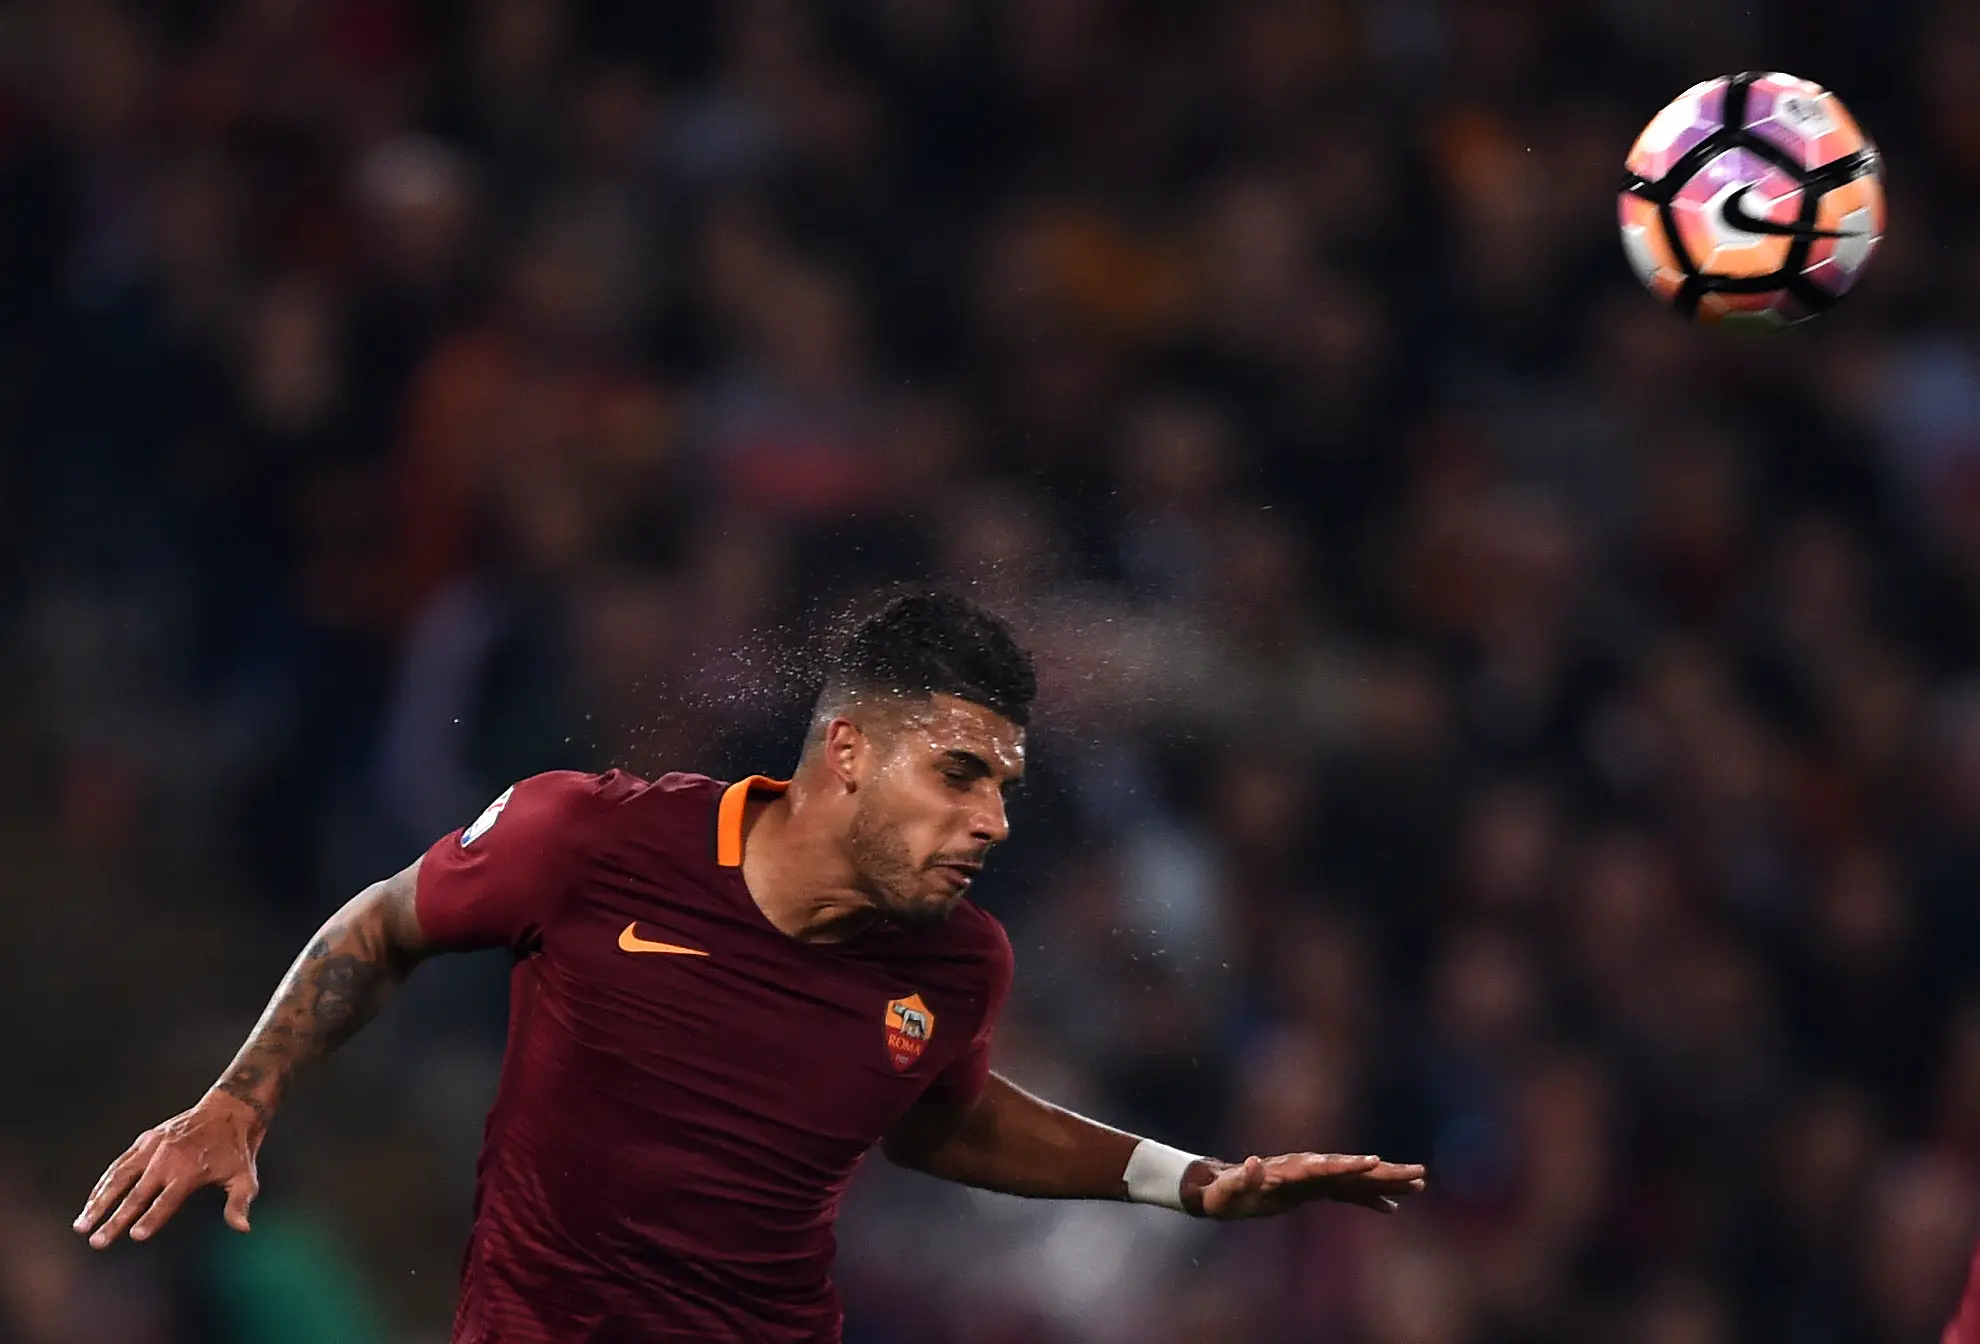 Bek AS Roma asal Brasil, Emerson Palmieri. (AFP/Filippo Monteforte)